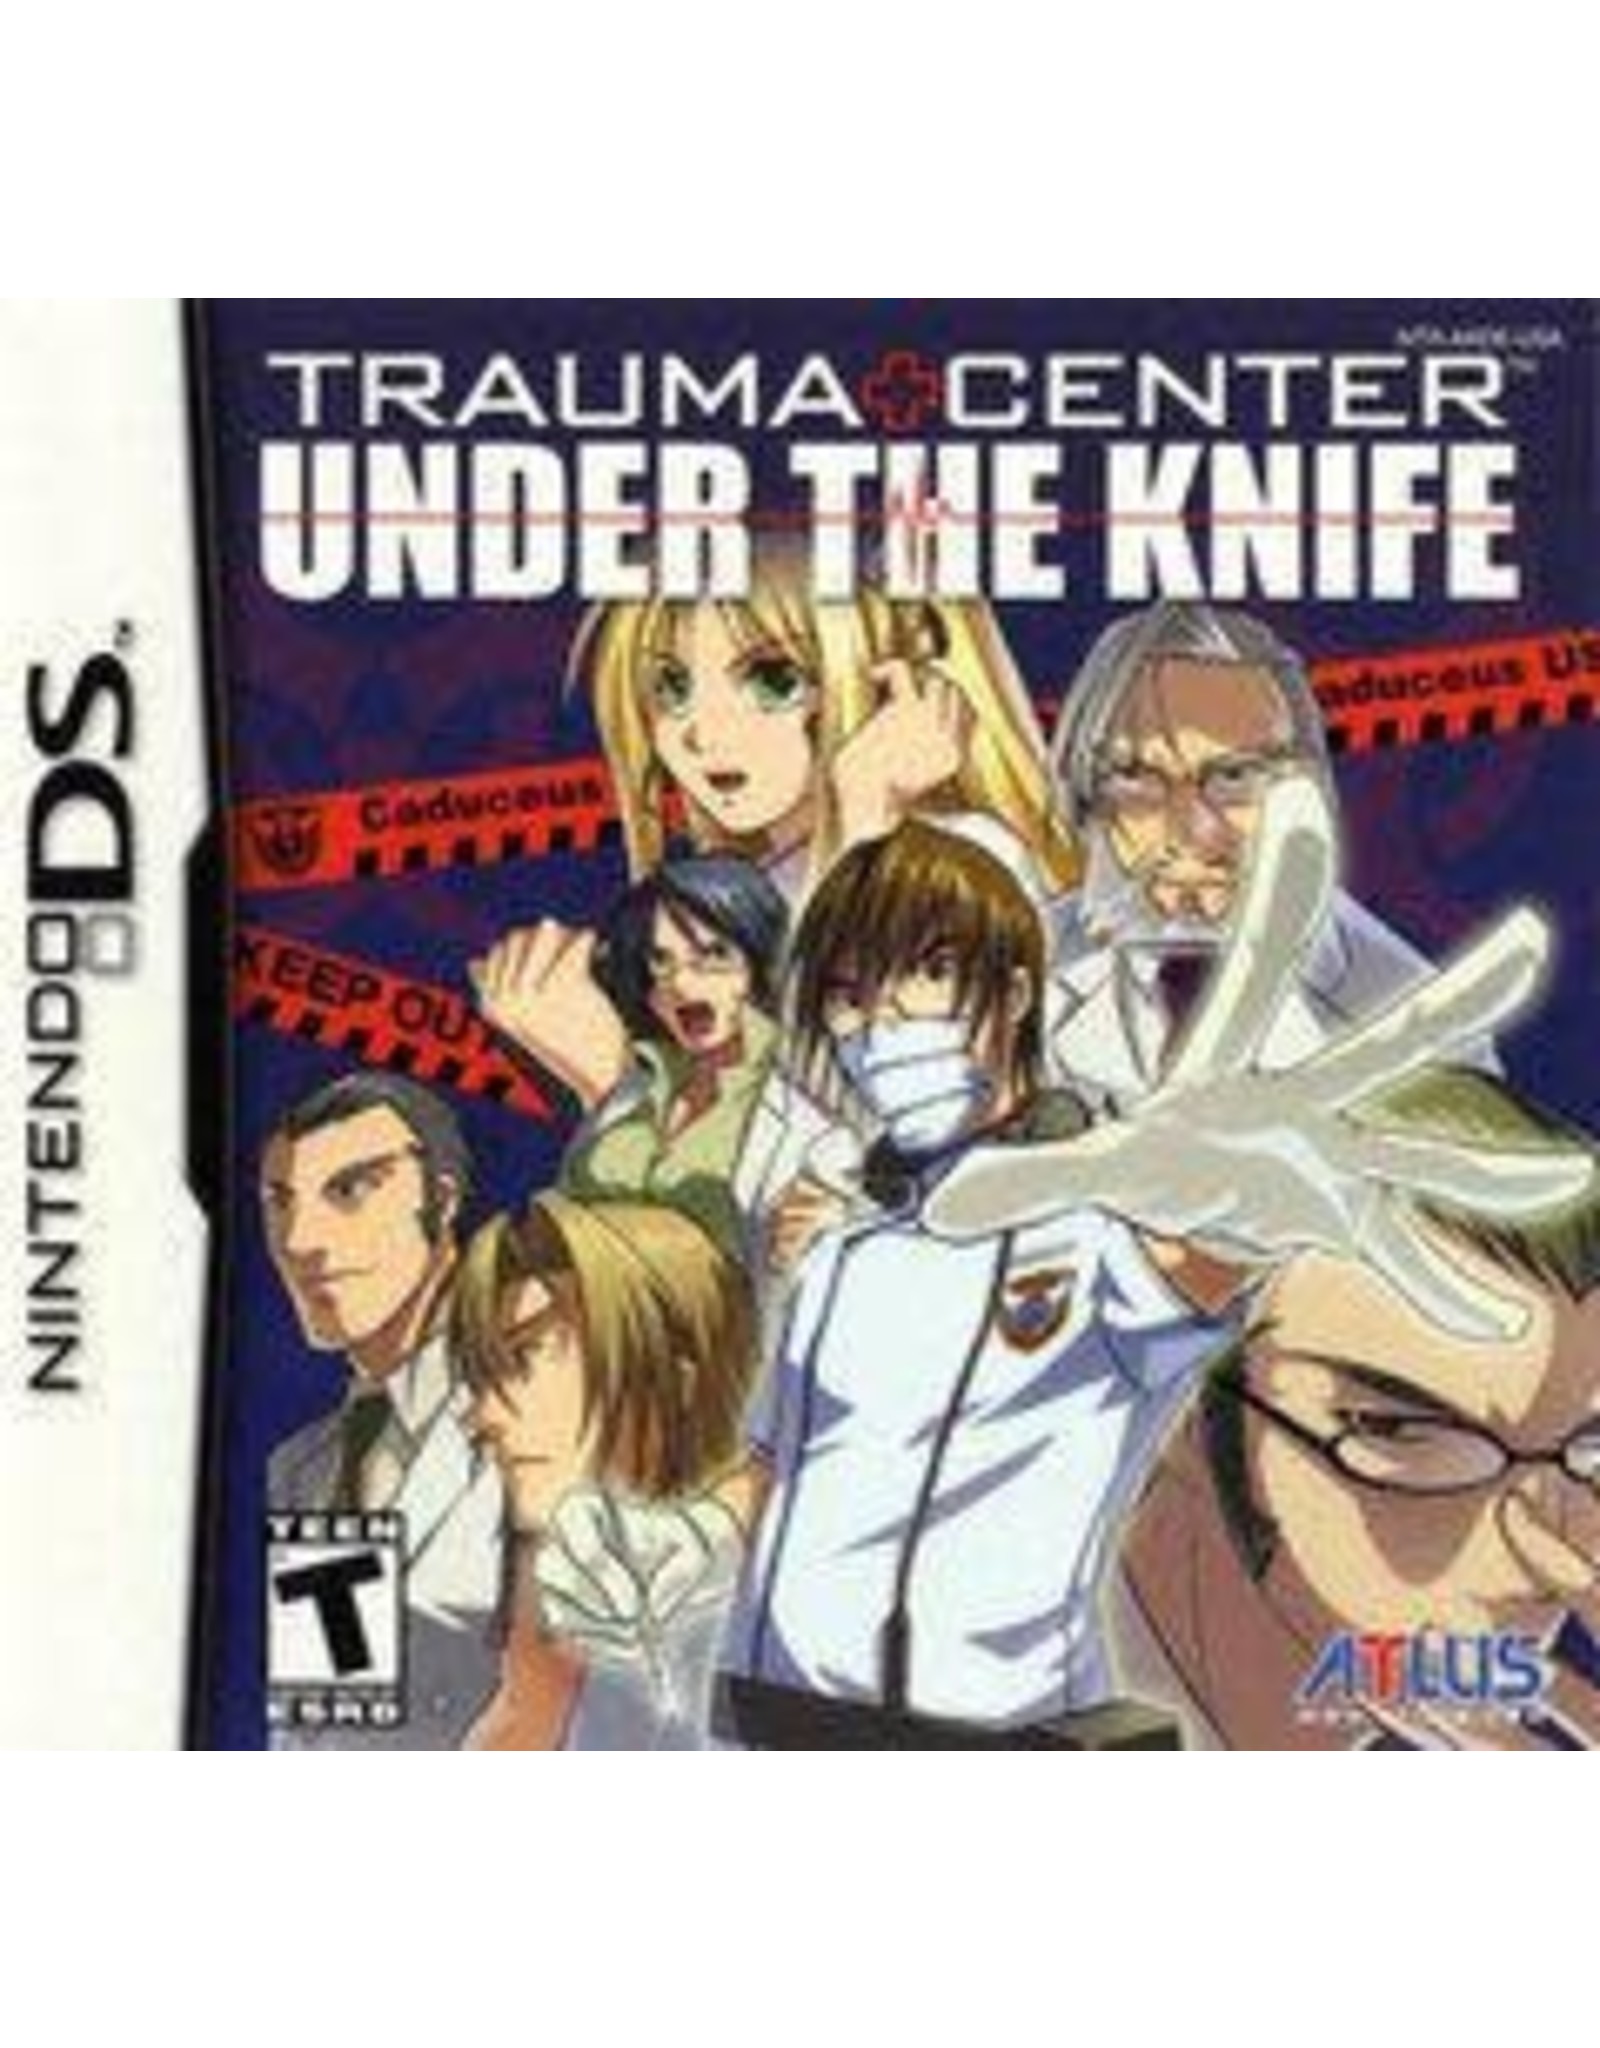 Nintendo DS Trauma Center Under the Knife (Cart Only, Damaged Cart)